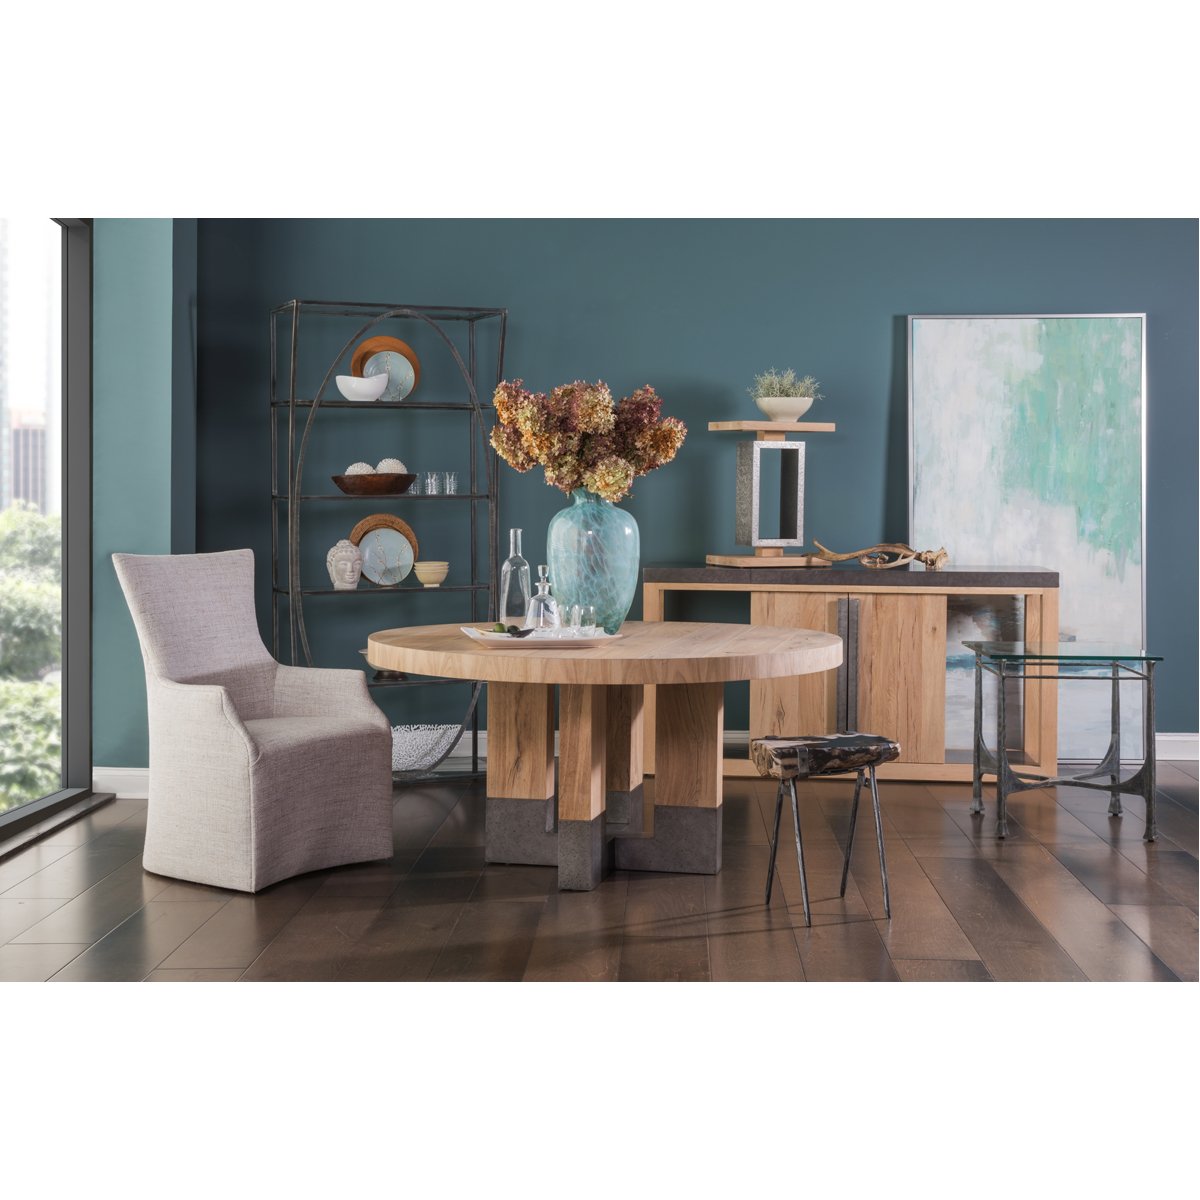 Artistica Home Verite Rectangular Spot Table 2240-950